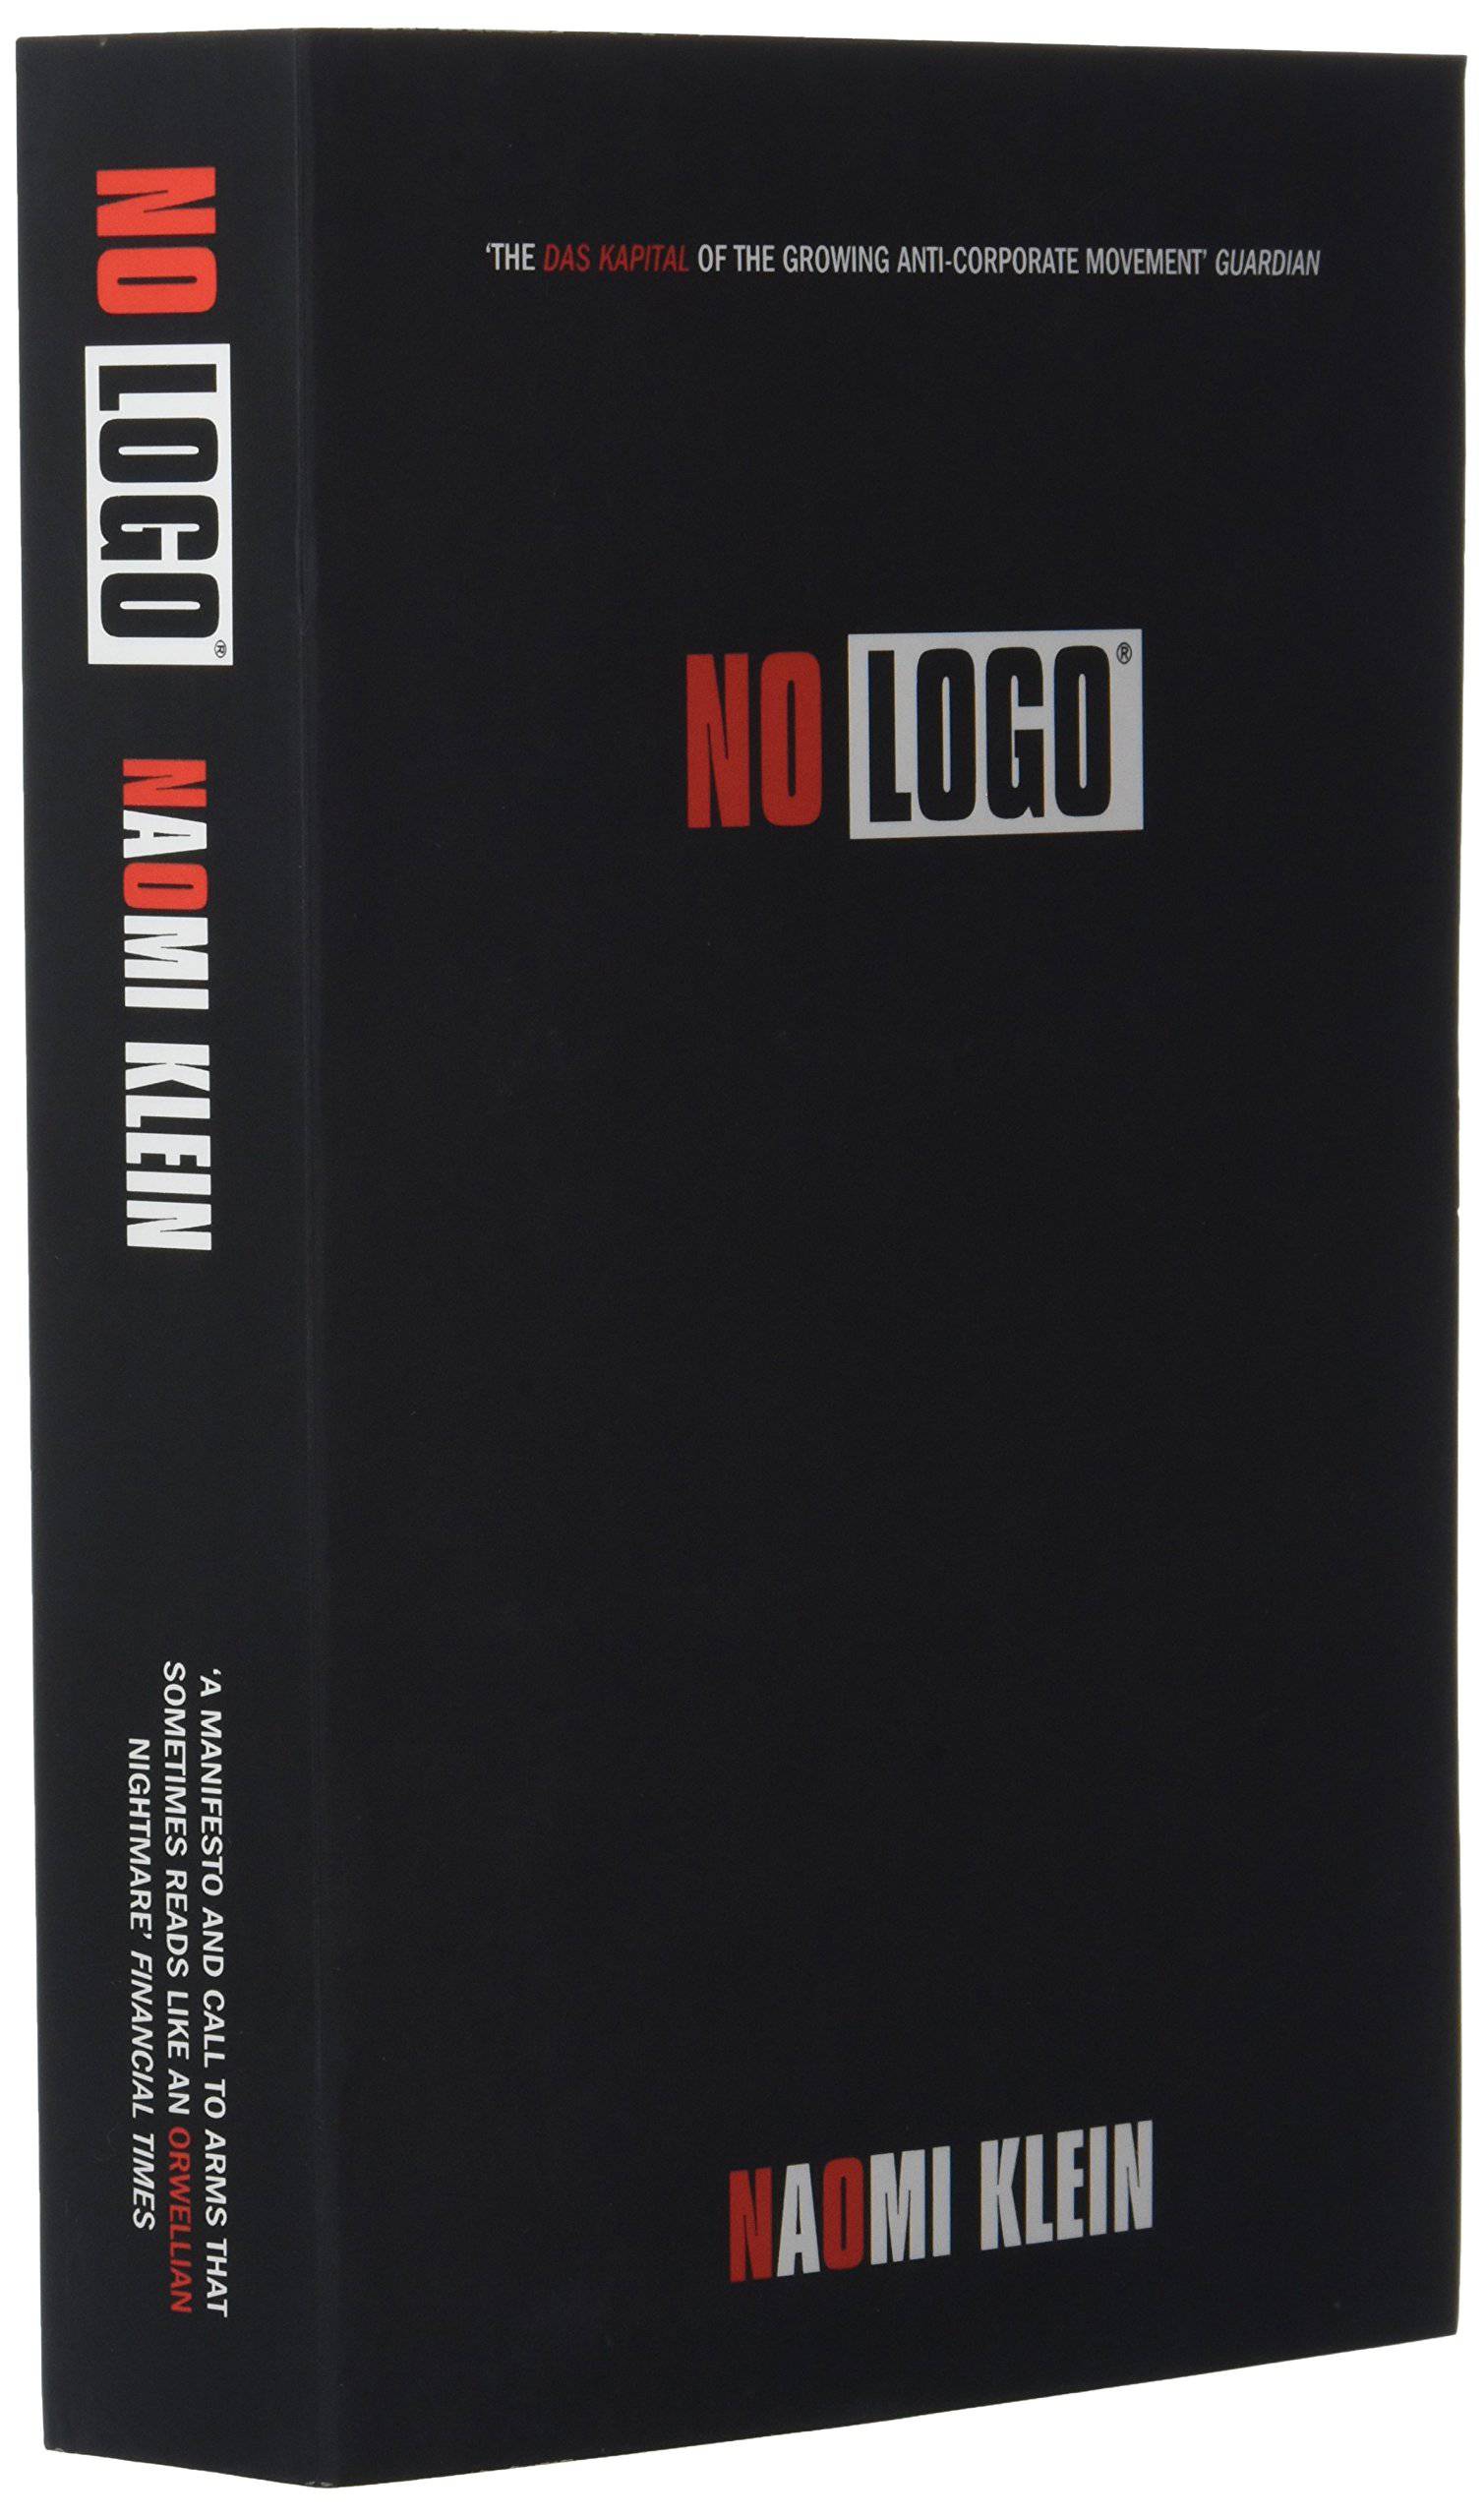 No logo by Naomi Klein